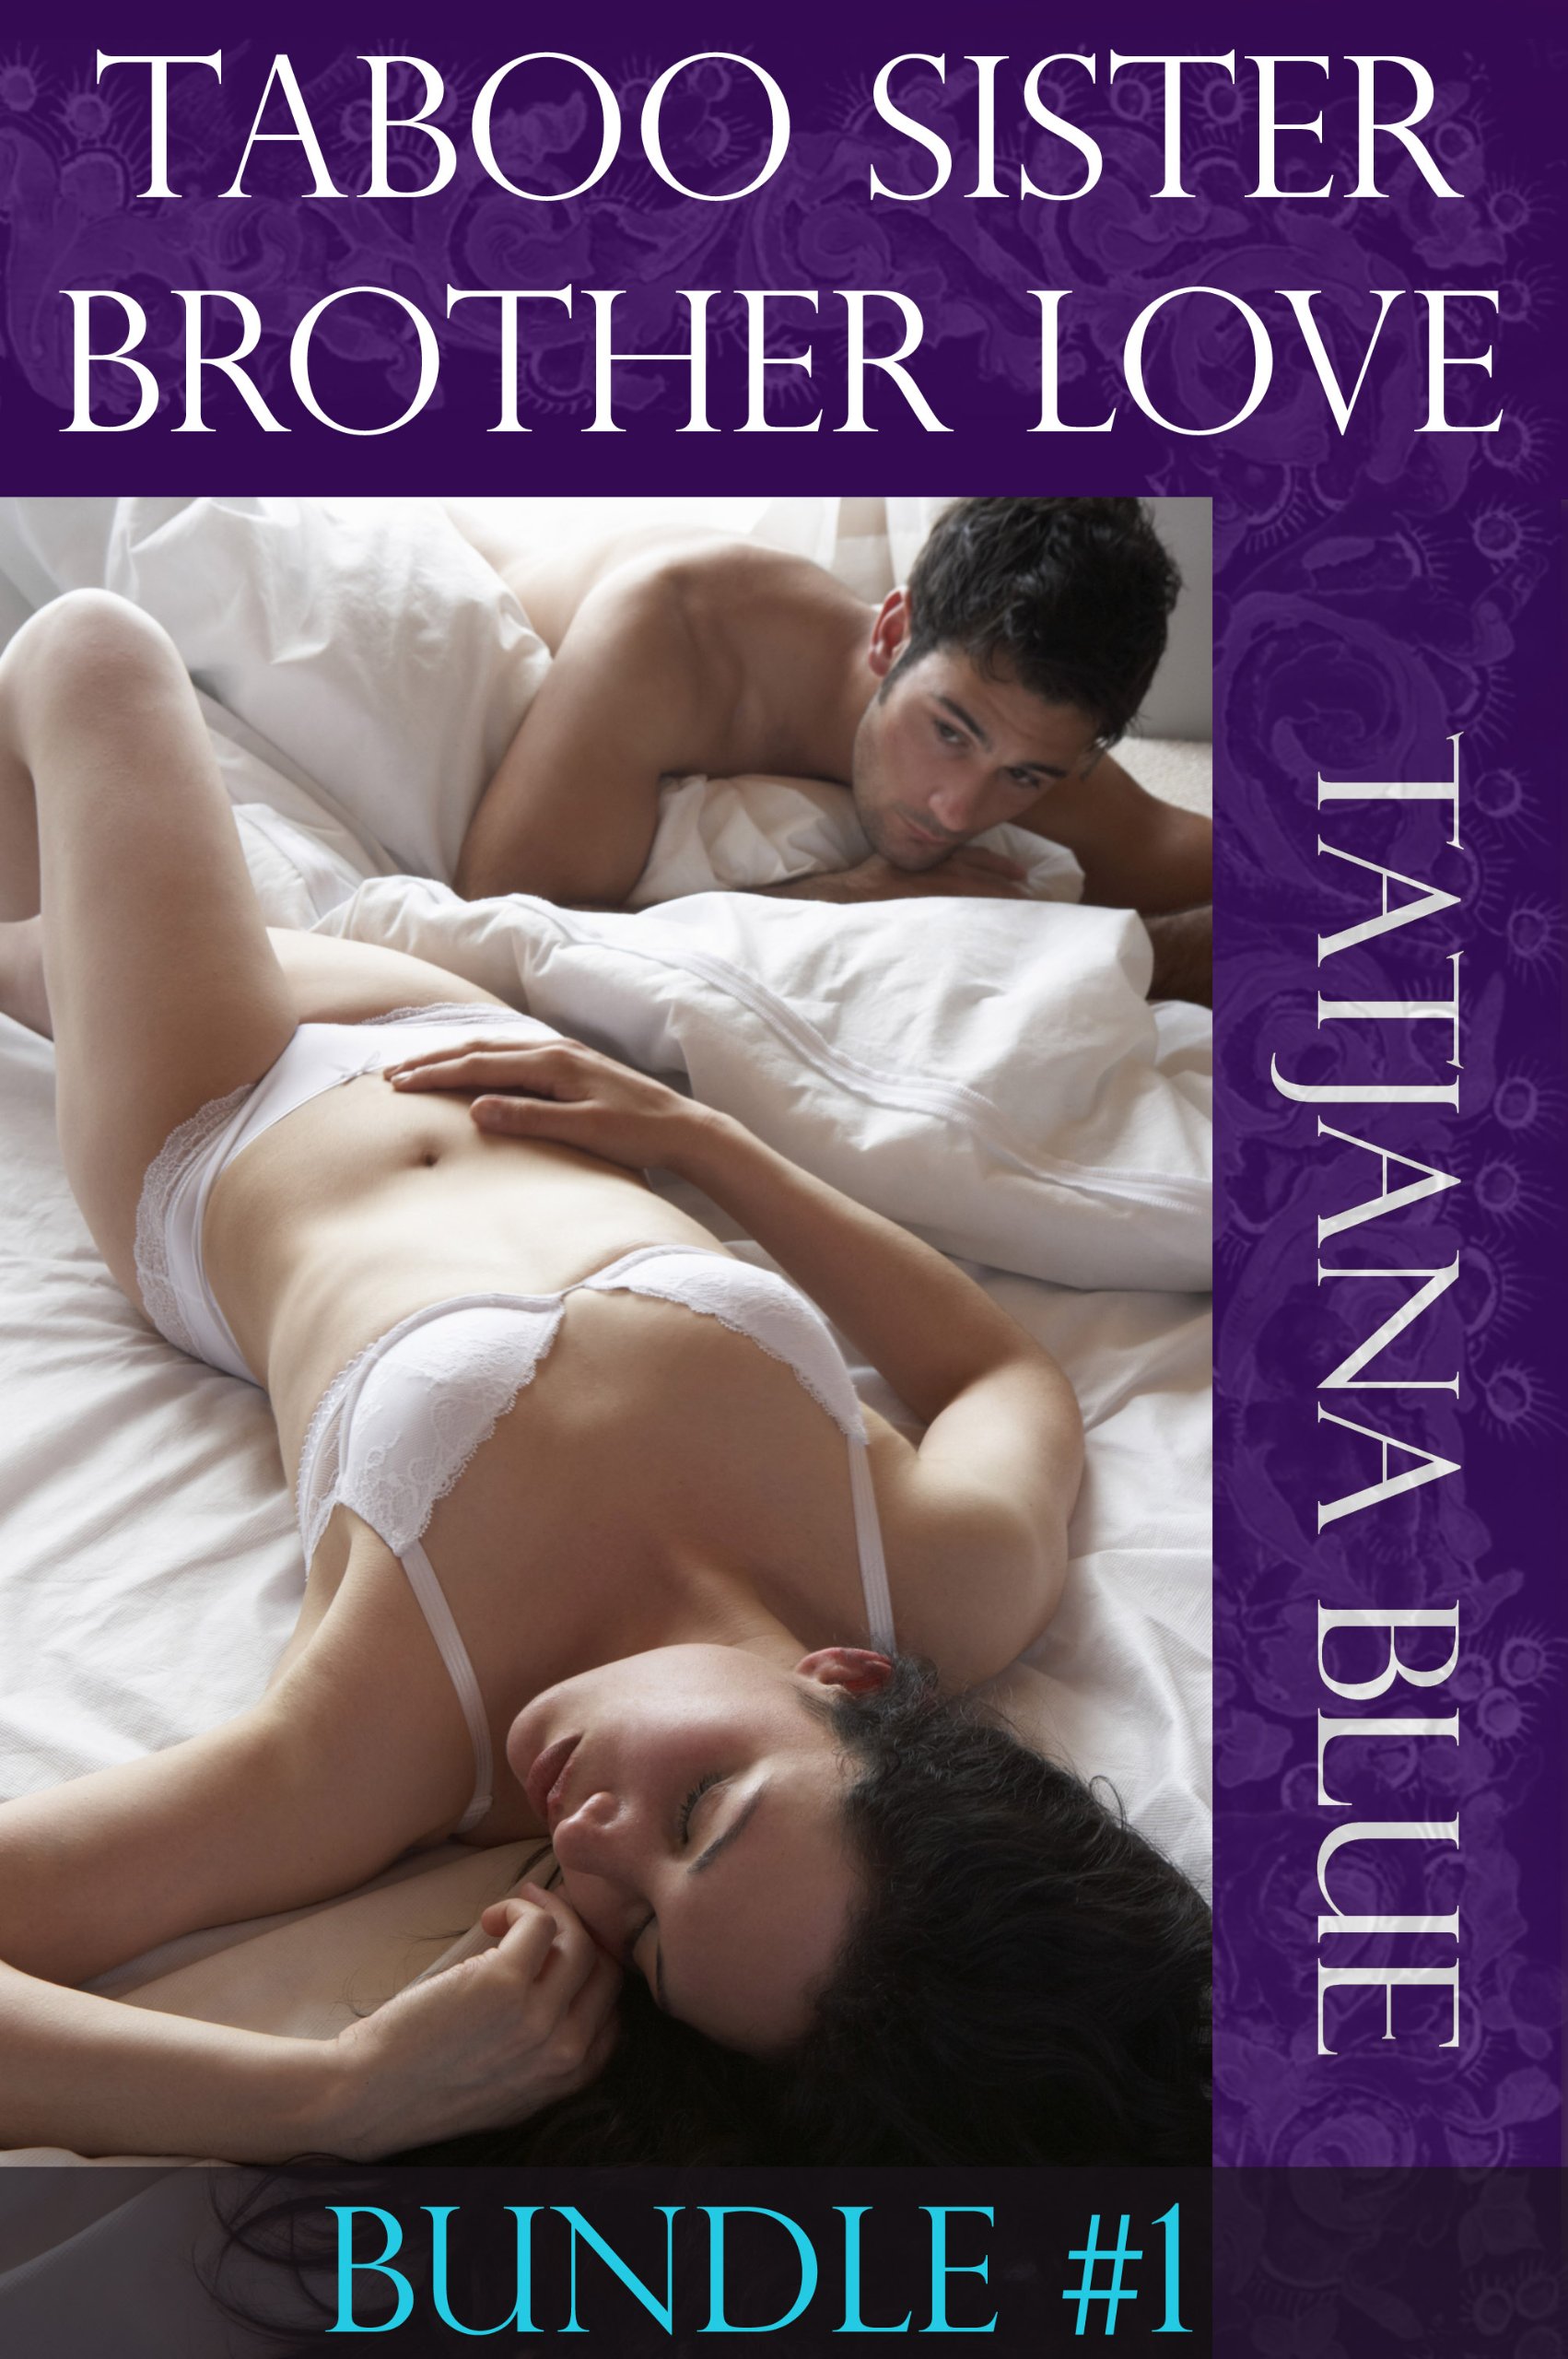 arnaldo jimenez recommends sister seduces sleeping brother pic